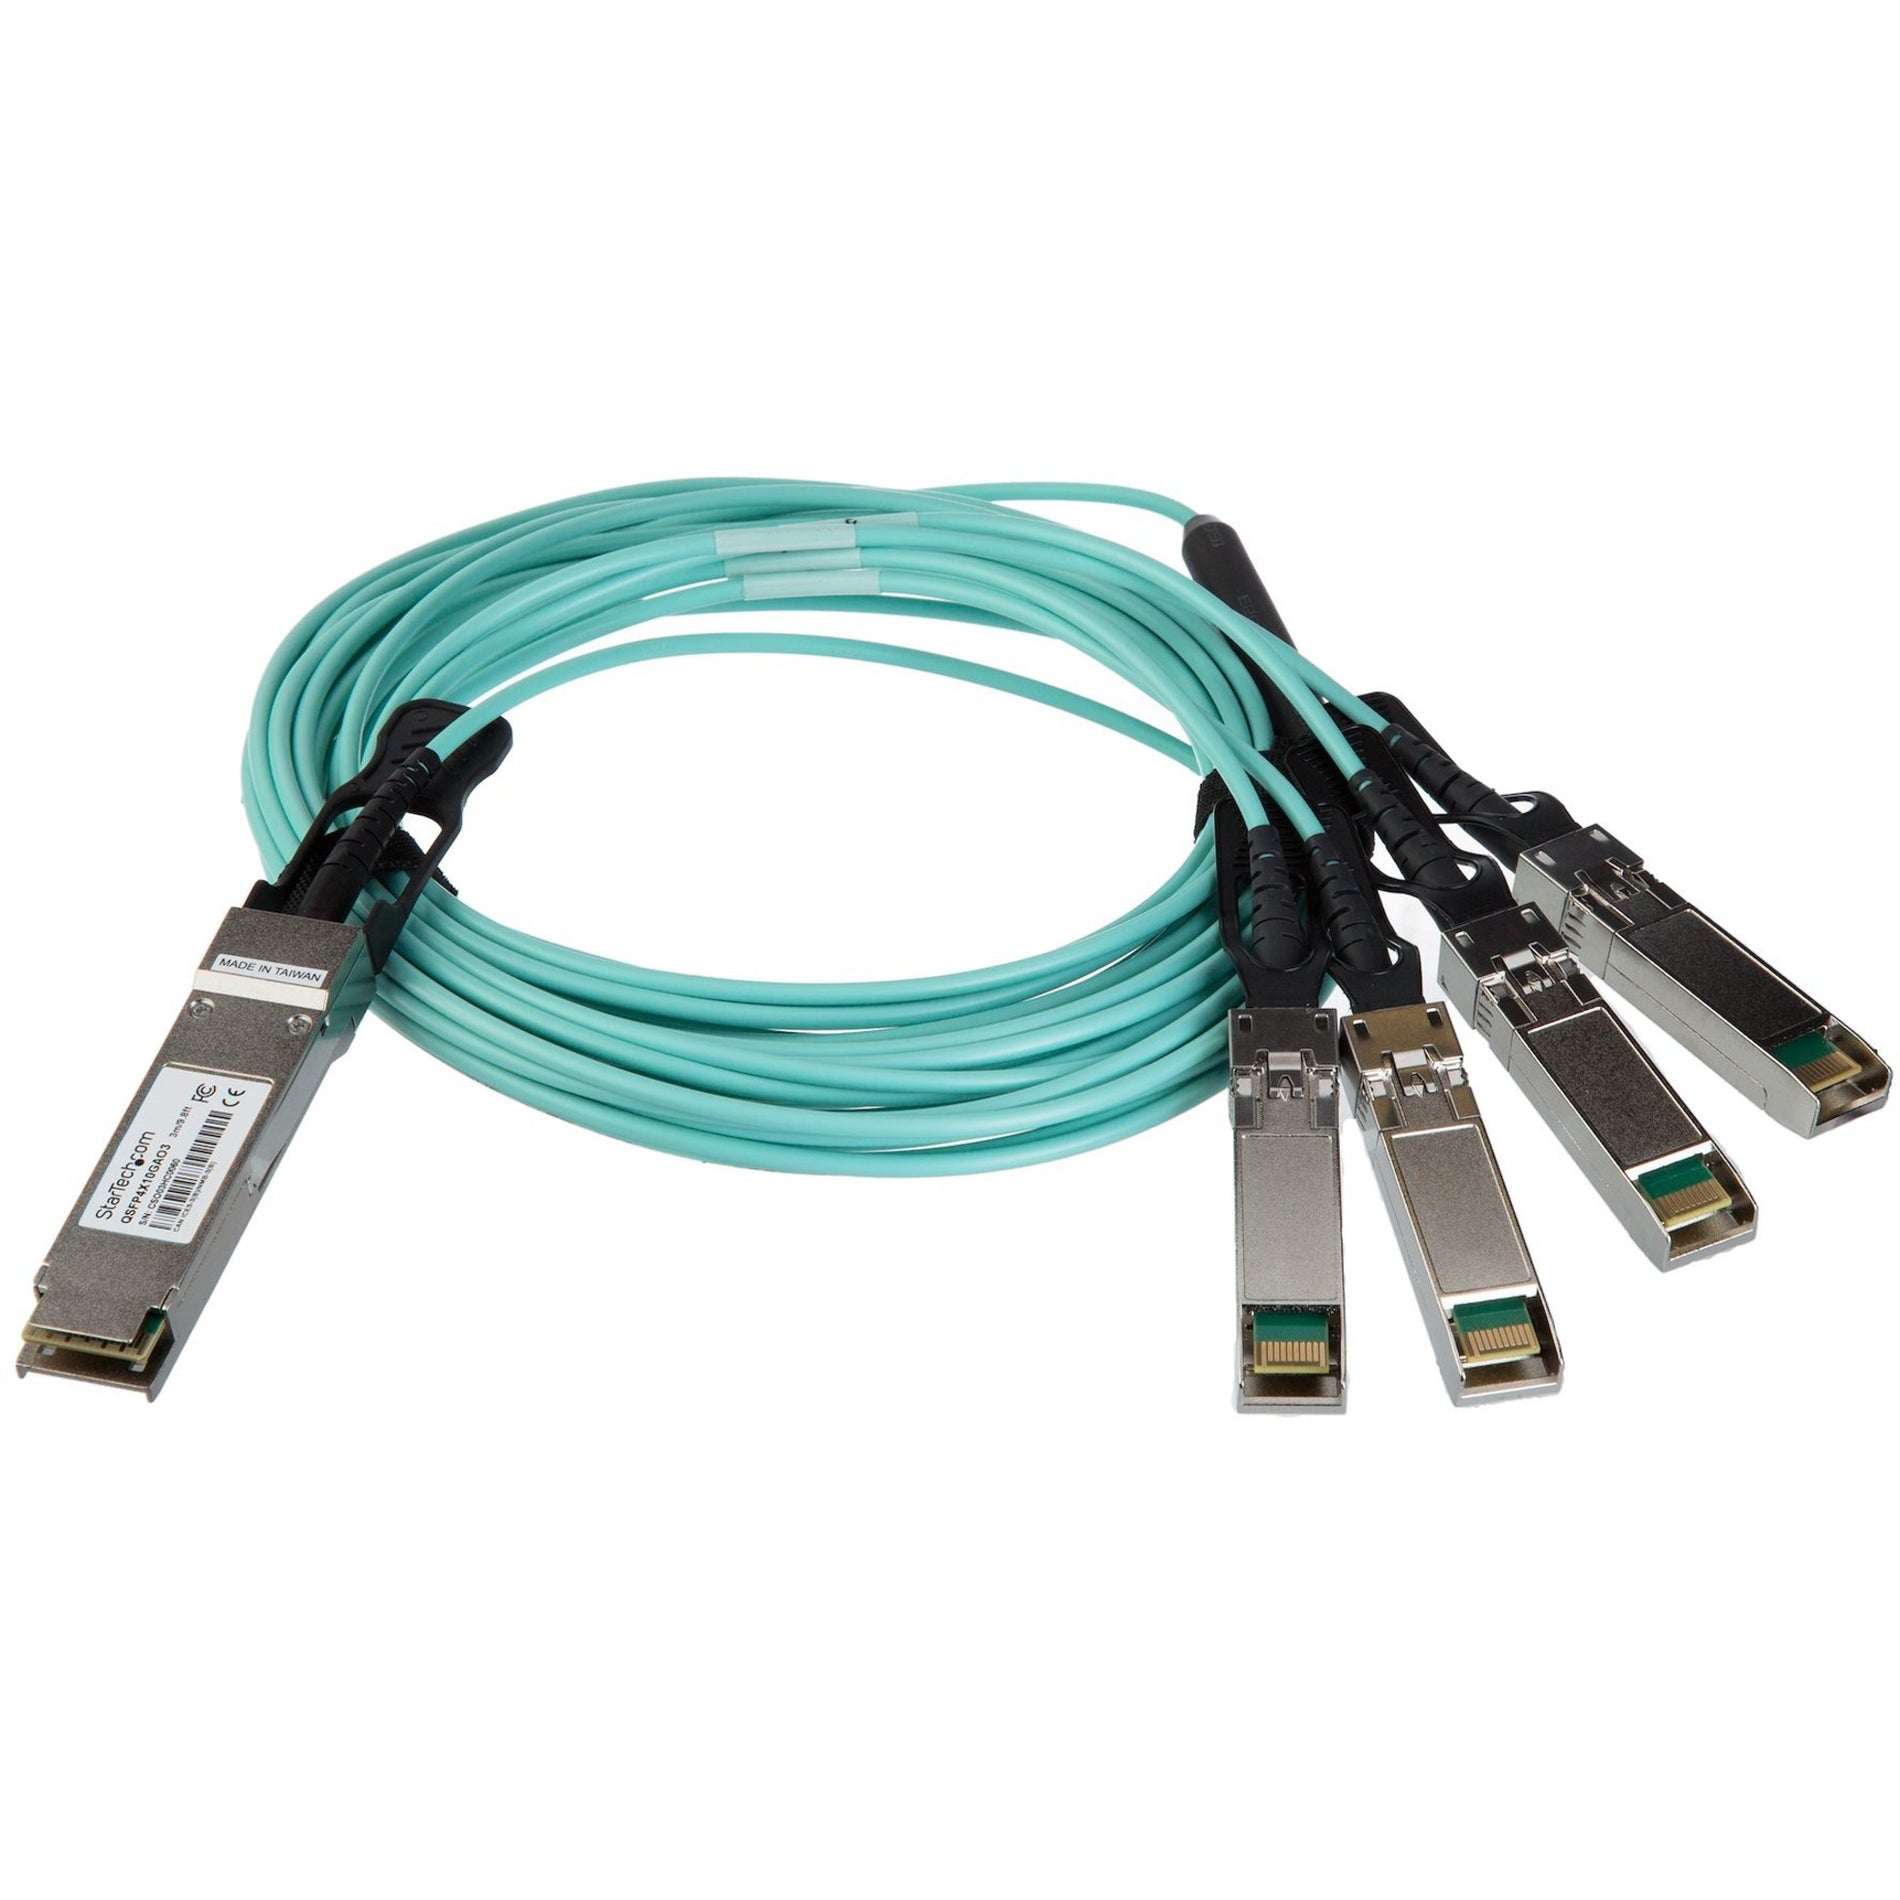 StarTech.com QSFP4X10GAO3 QSFP+ to 4x SFP+ - 3 m (9.8 ft.) Network Cable Active Hot-swappable Flexible  スタートレック・ドットコム QSFP4X10GAO3 QSFP+ から 4x SFP+ - 3 メートル (9.8 フィート) ネットワークケーブル、アクティブ、ホットスワップ可能、フレキシブル